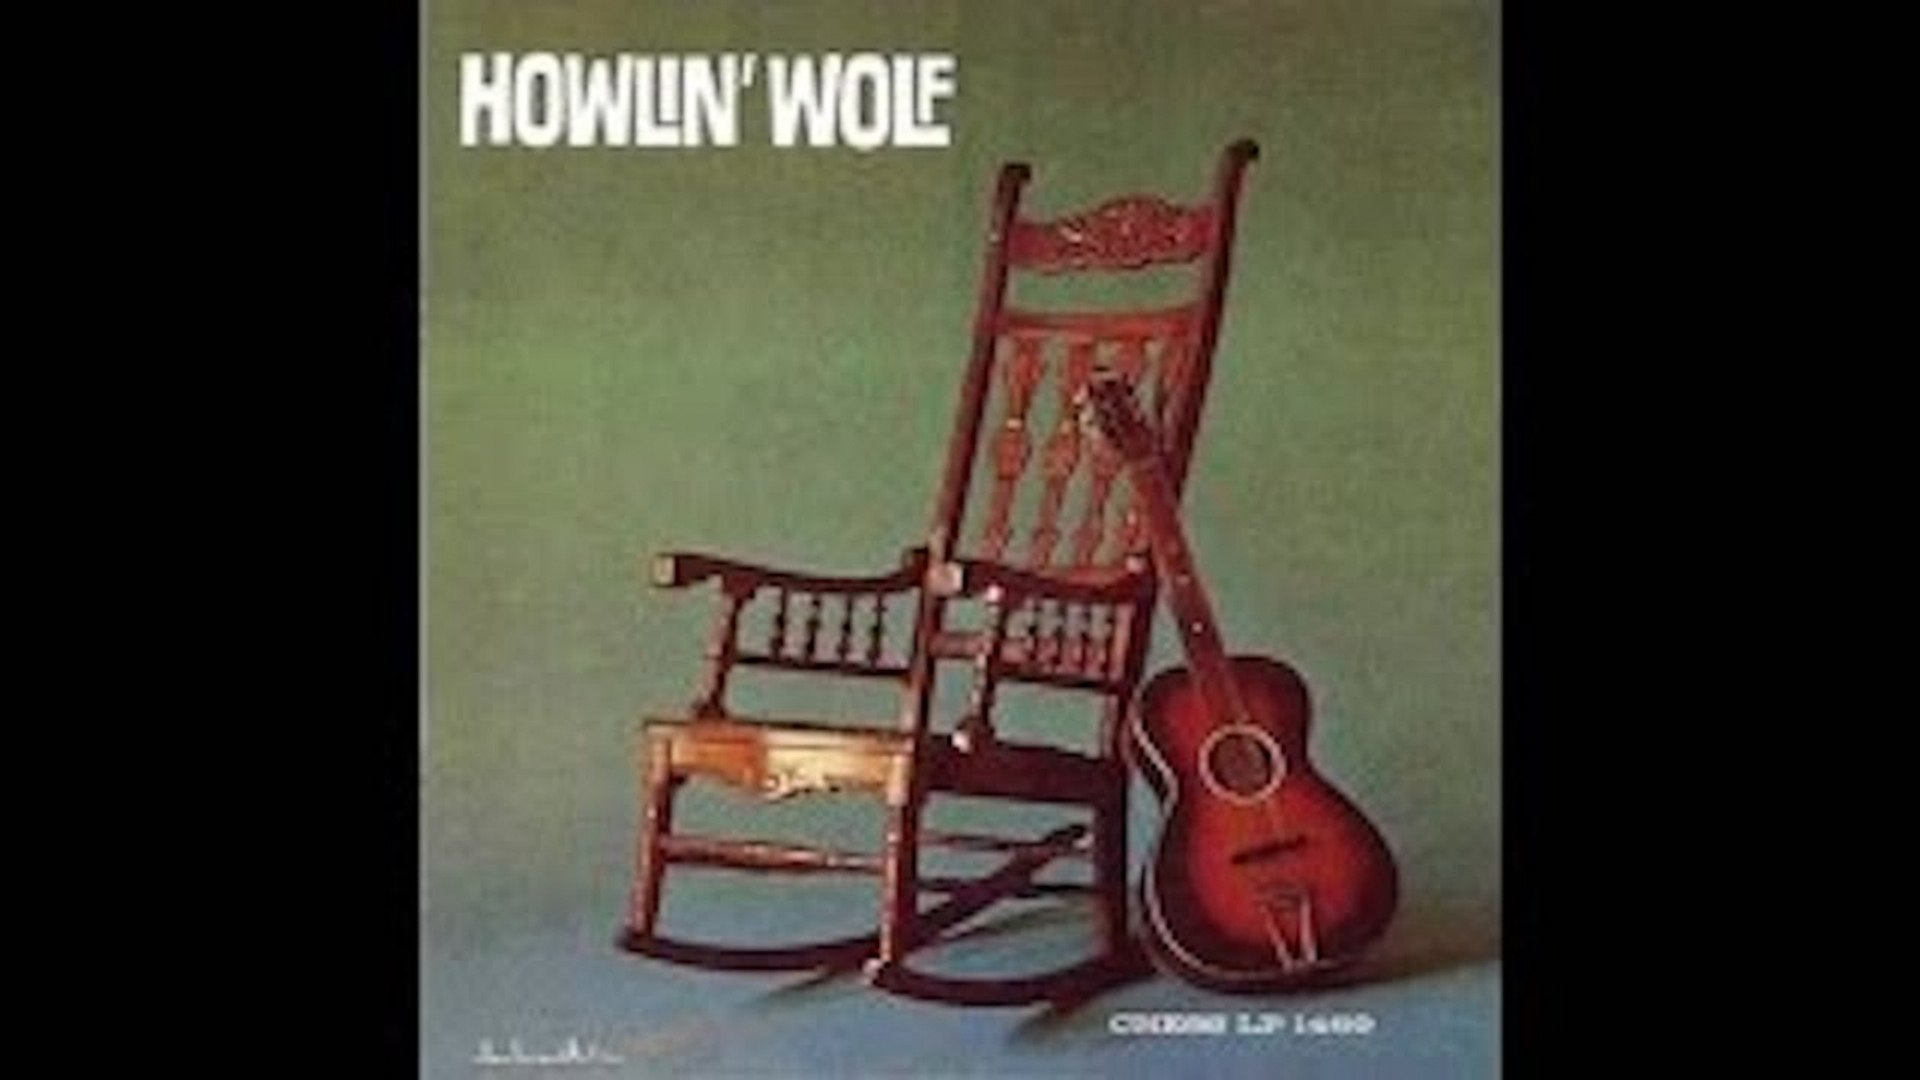 Howlin' Wolf - Howlin' Wolf [1962] - The Greatest Blues Songs